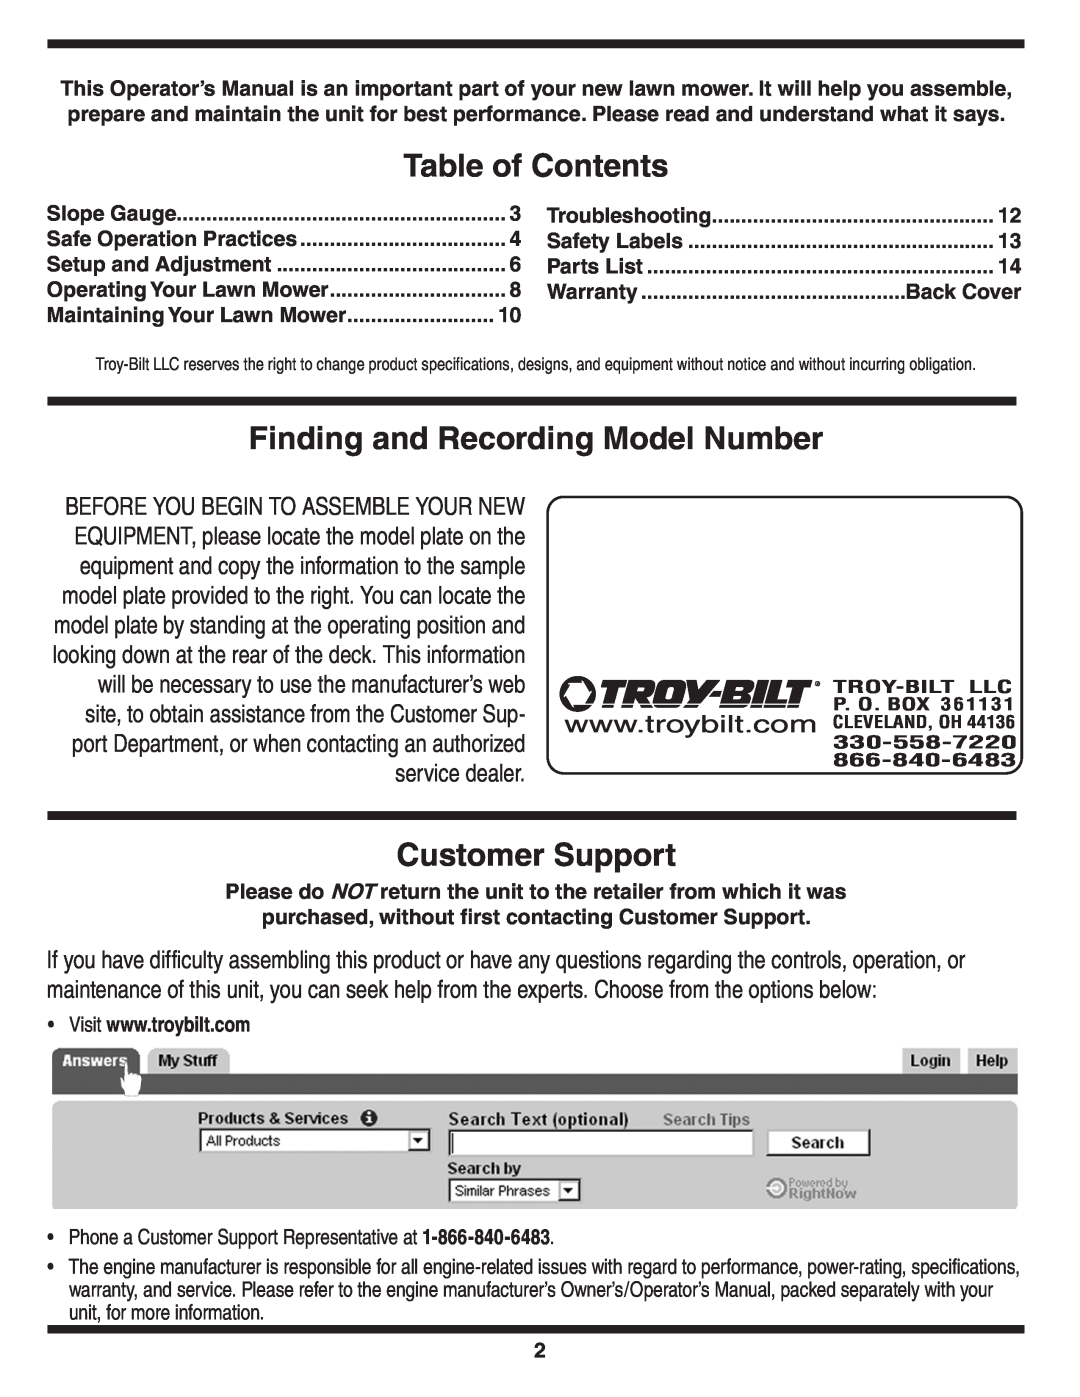 Troy-Bilt Series 540 Table of Contents, Finding and Recording Model Number, Customer Support, service dealer, Slope Gauge 